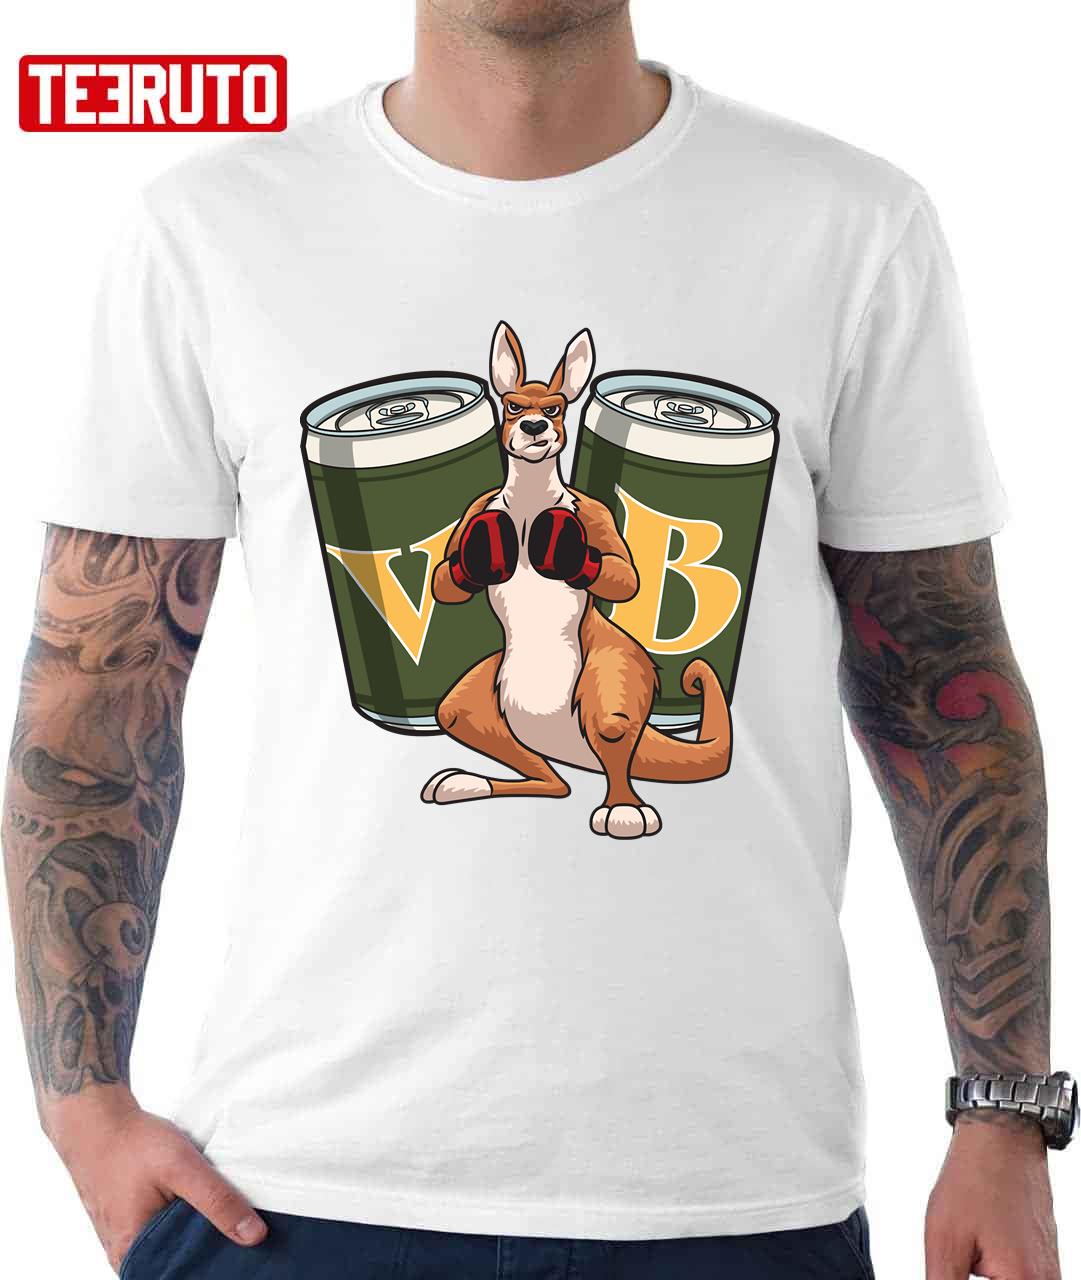 Cartoon Australian Boxing Kangaroo Unisex T-Shirt